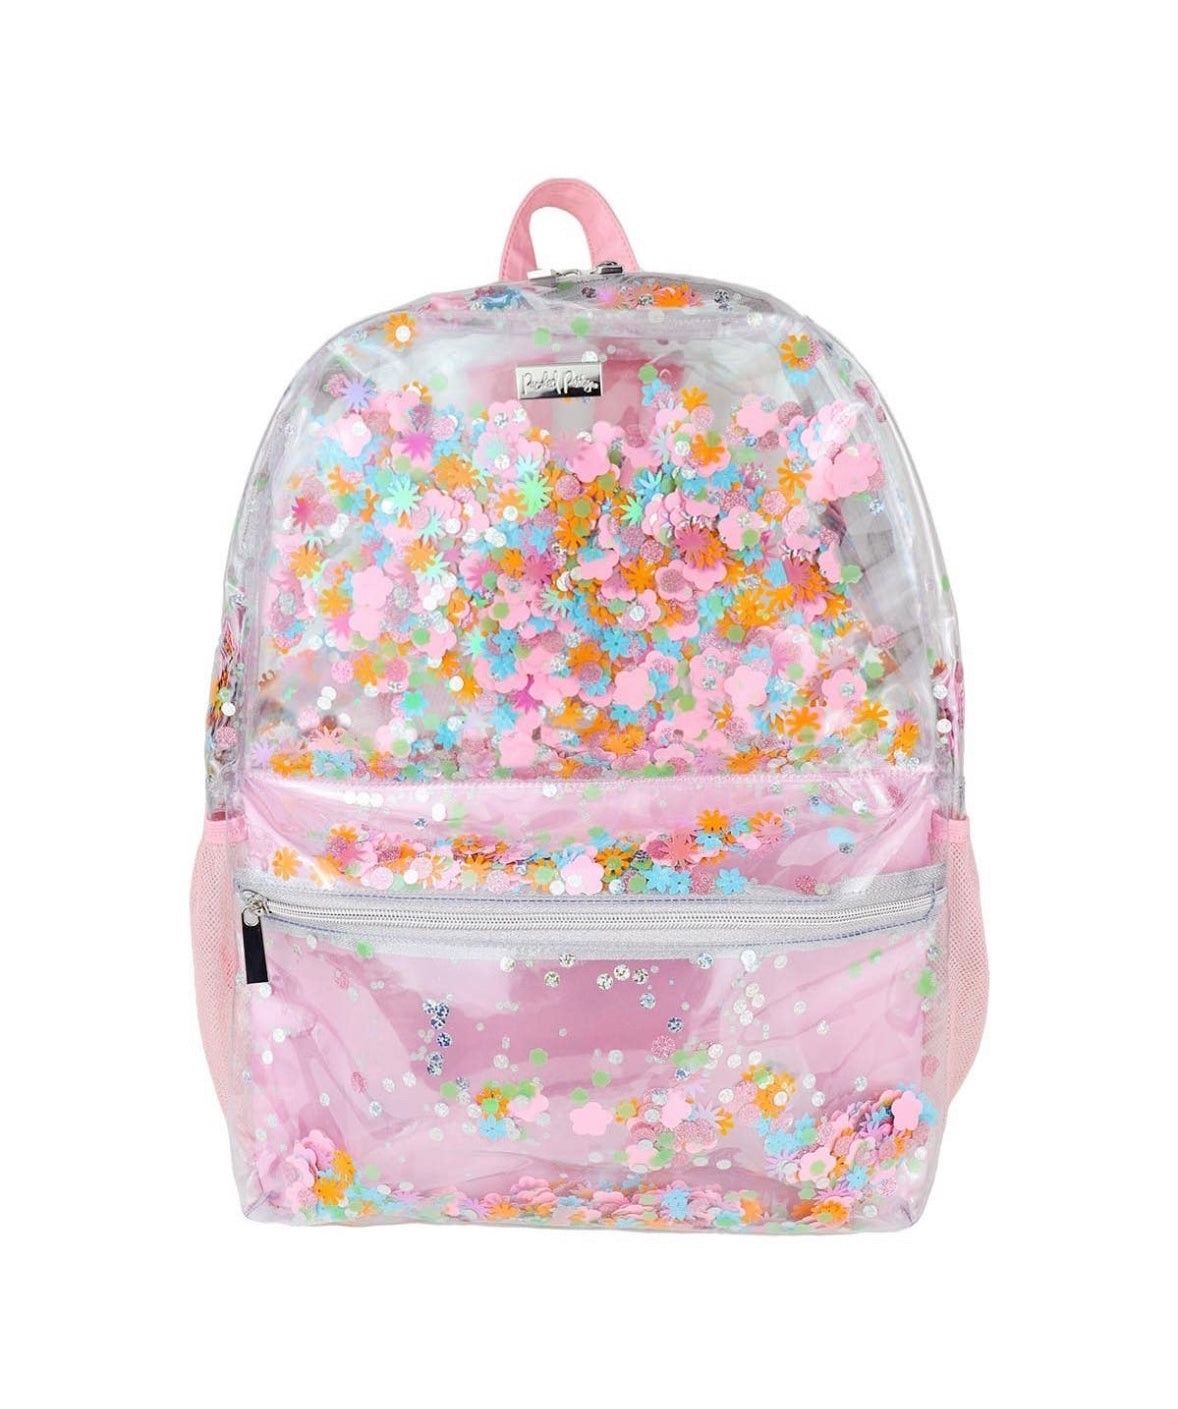 Flower Confetti Backpack